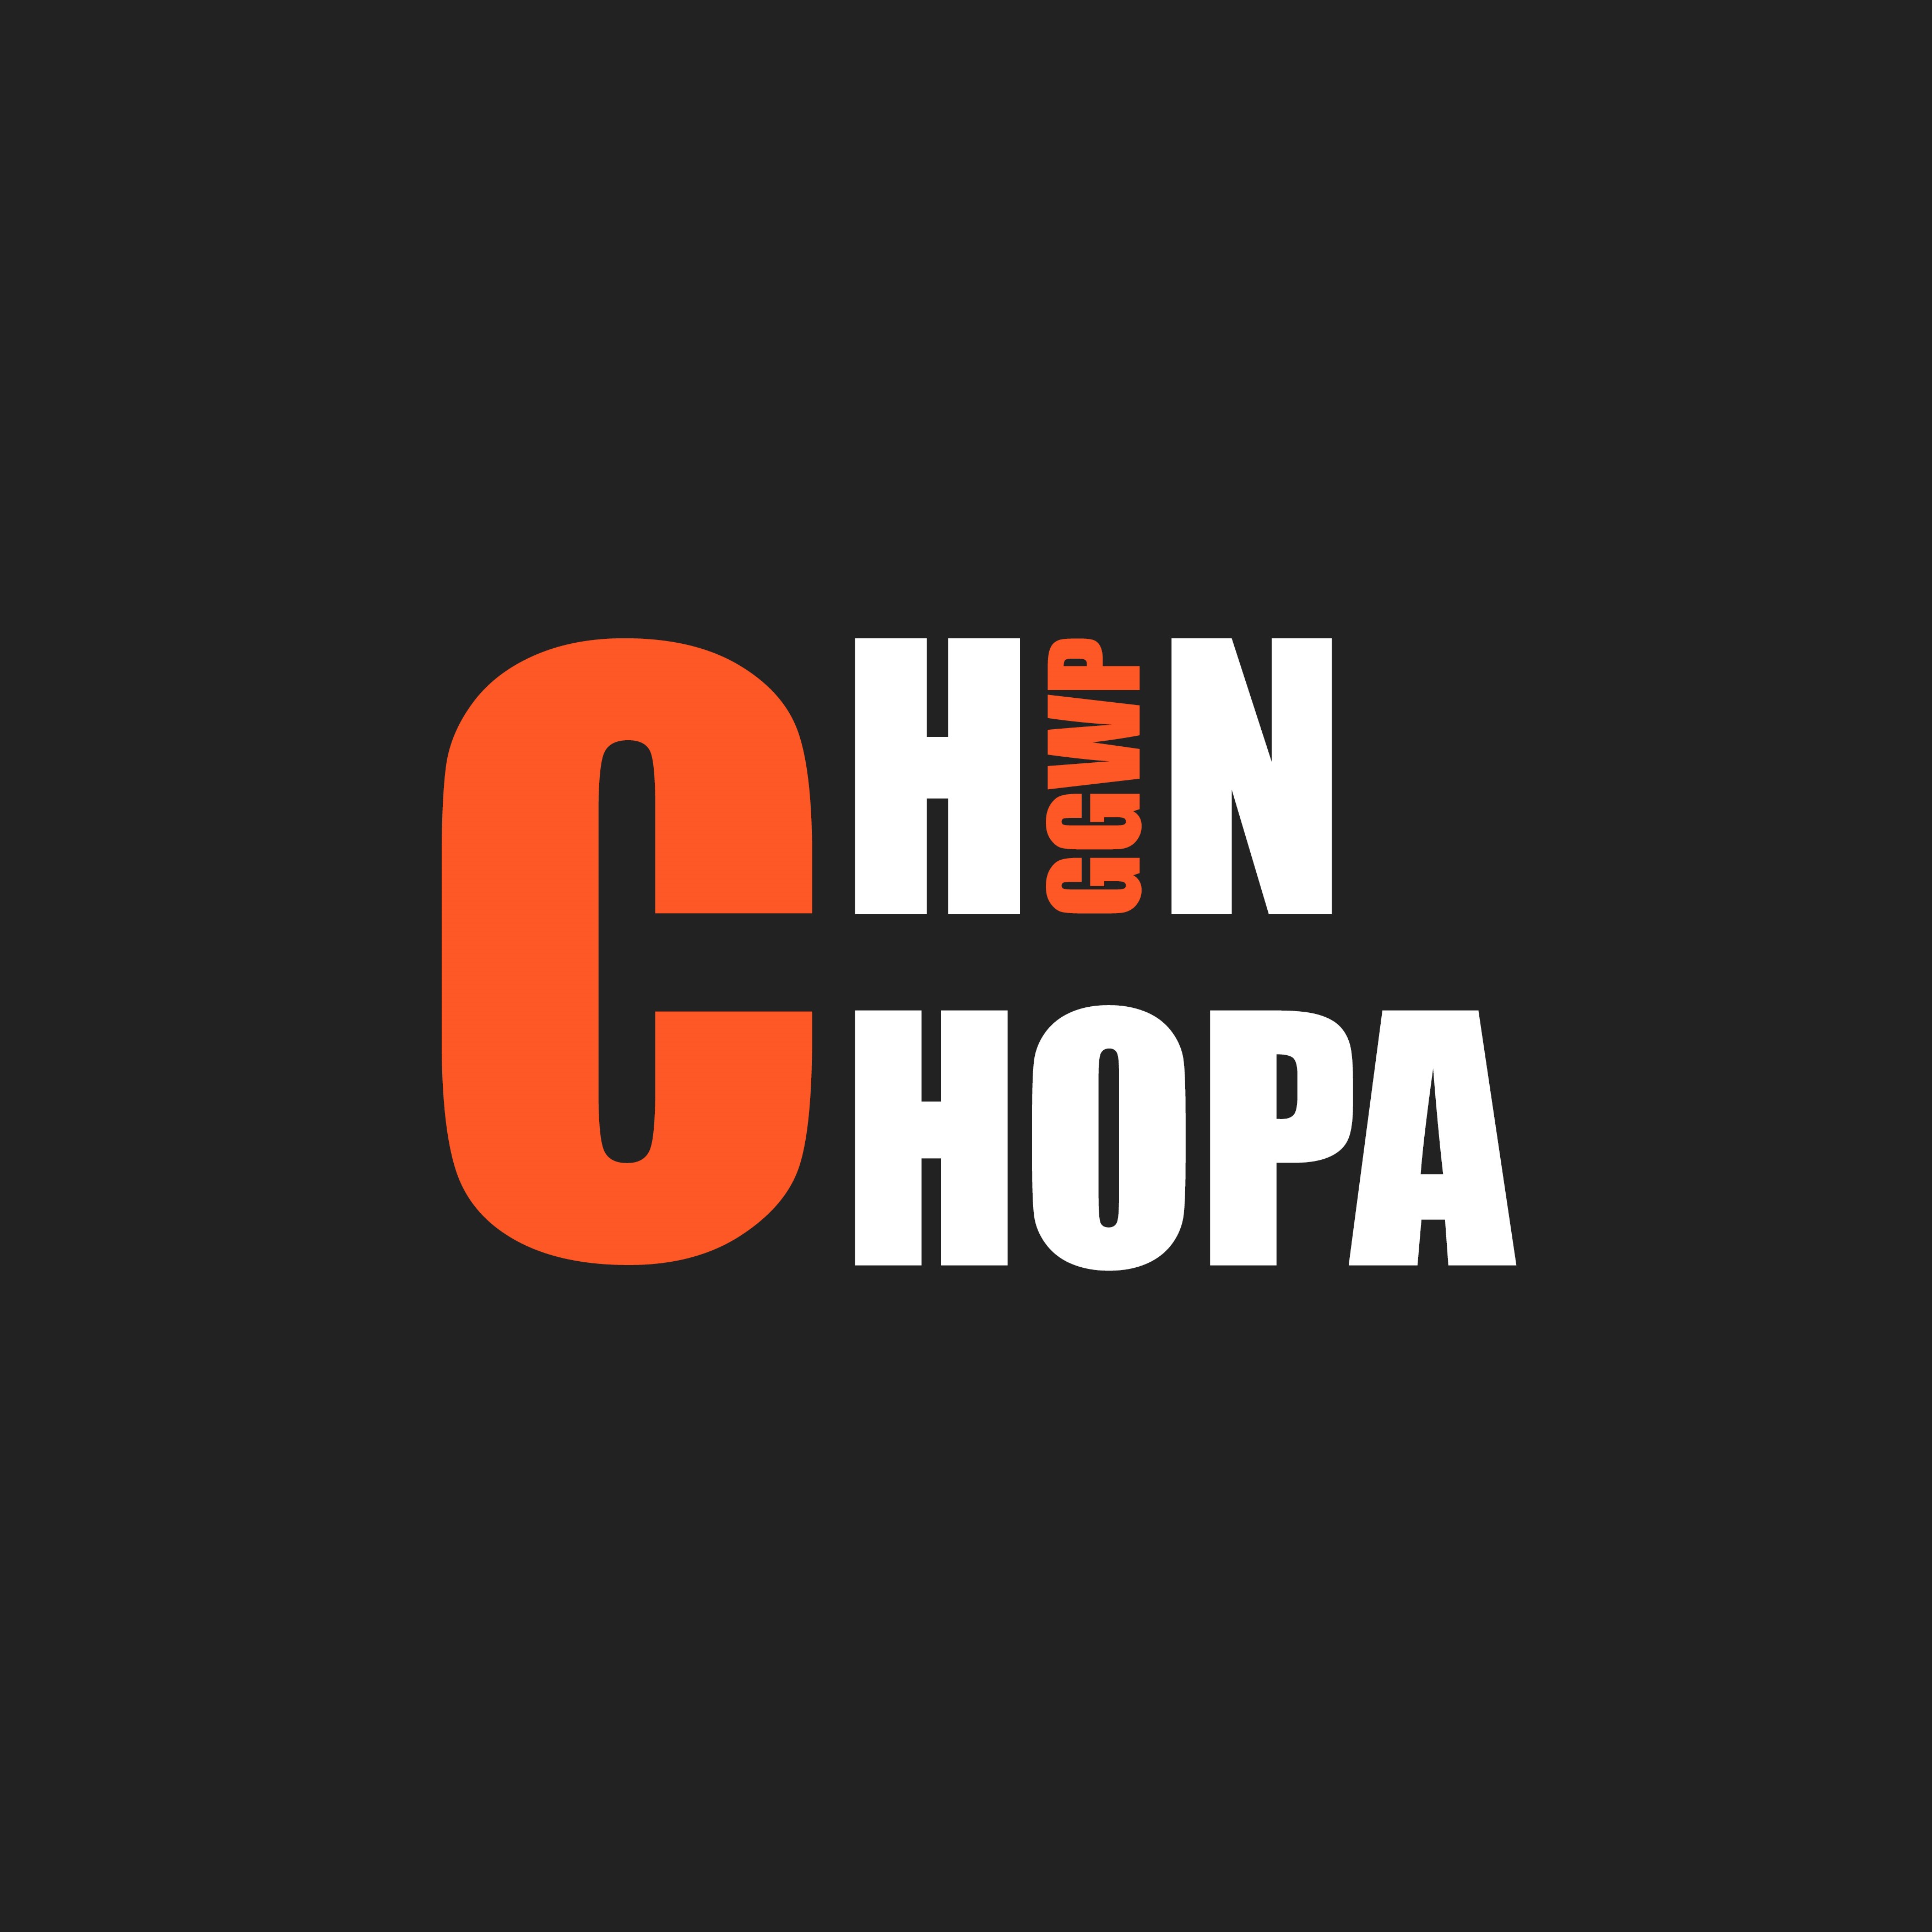 ChinChopa